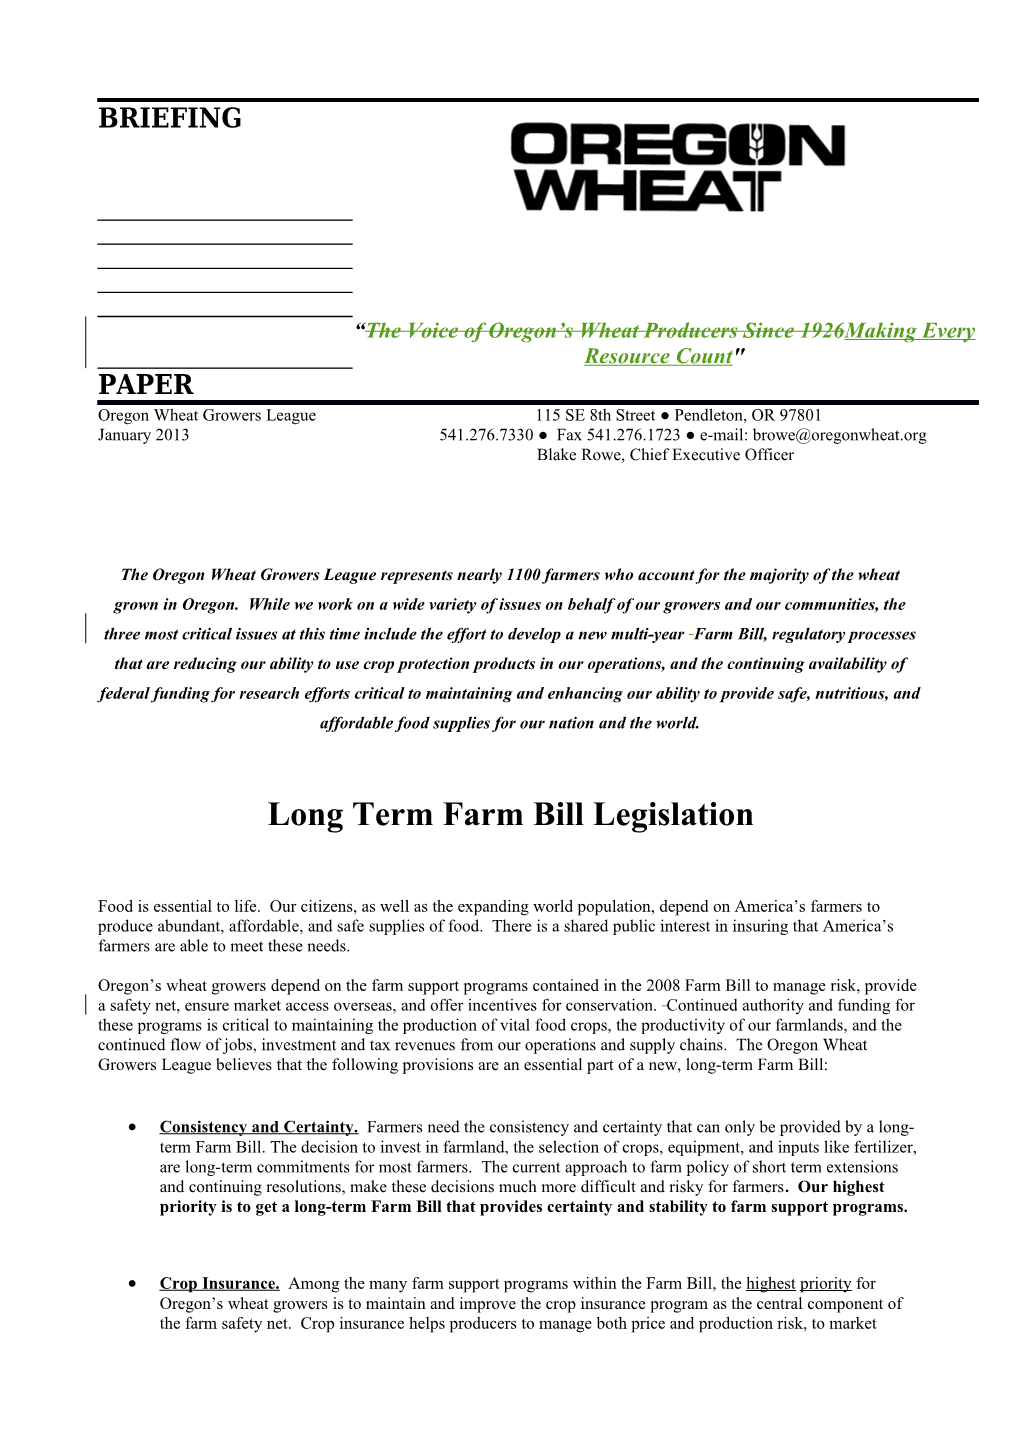 Long Term Farm Bill Legislation